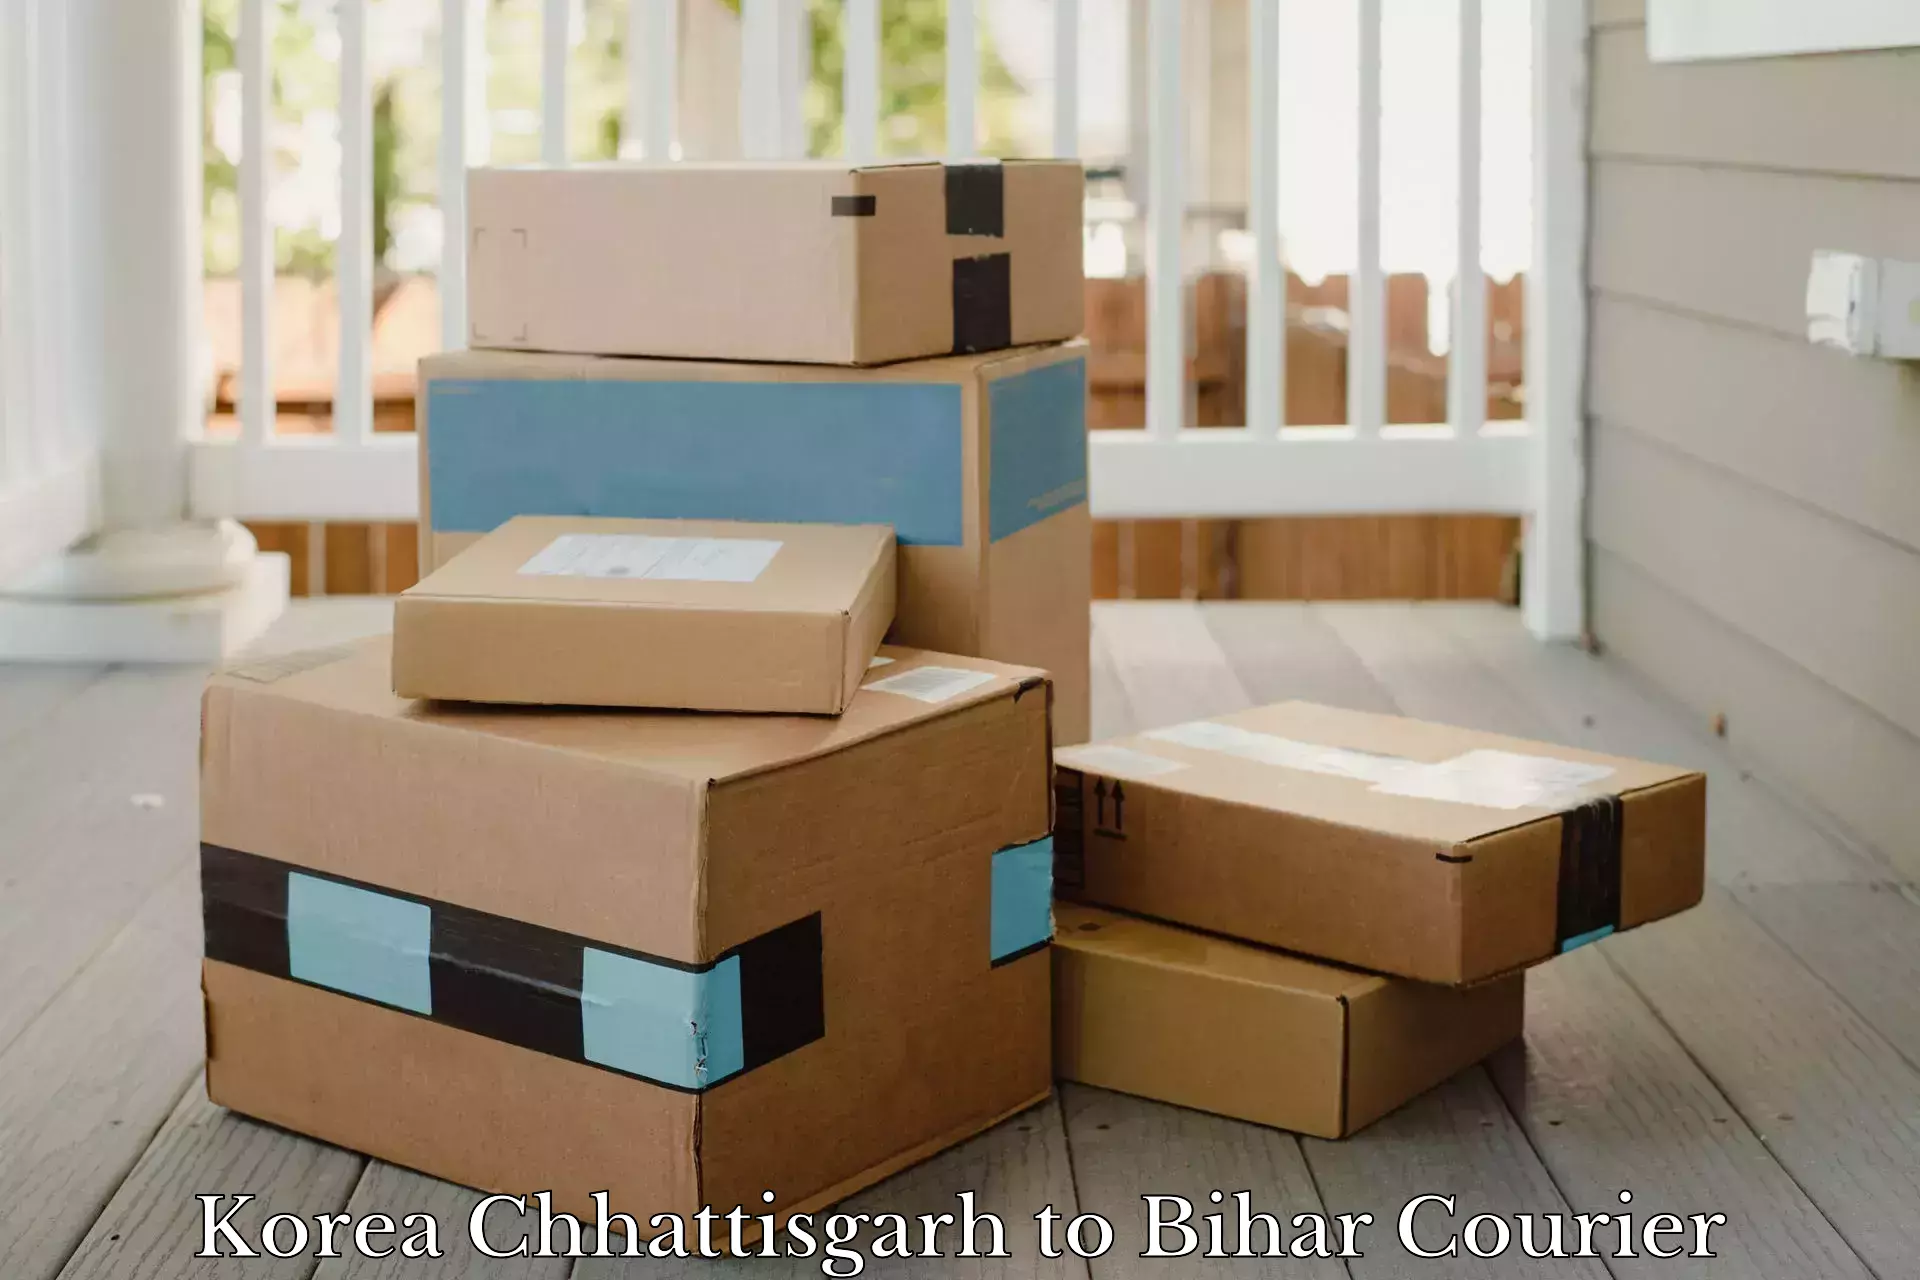 Doorstep delivery service Korea Chhattisgarh to Barachati